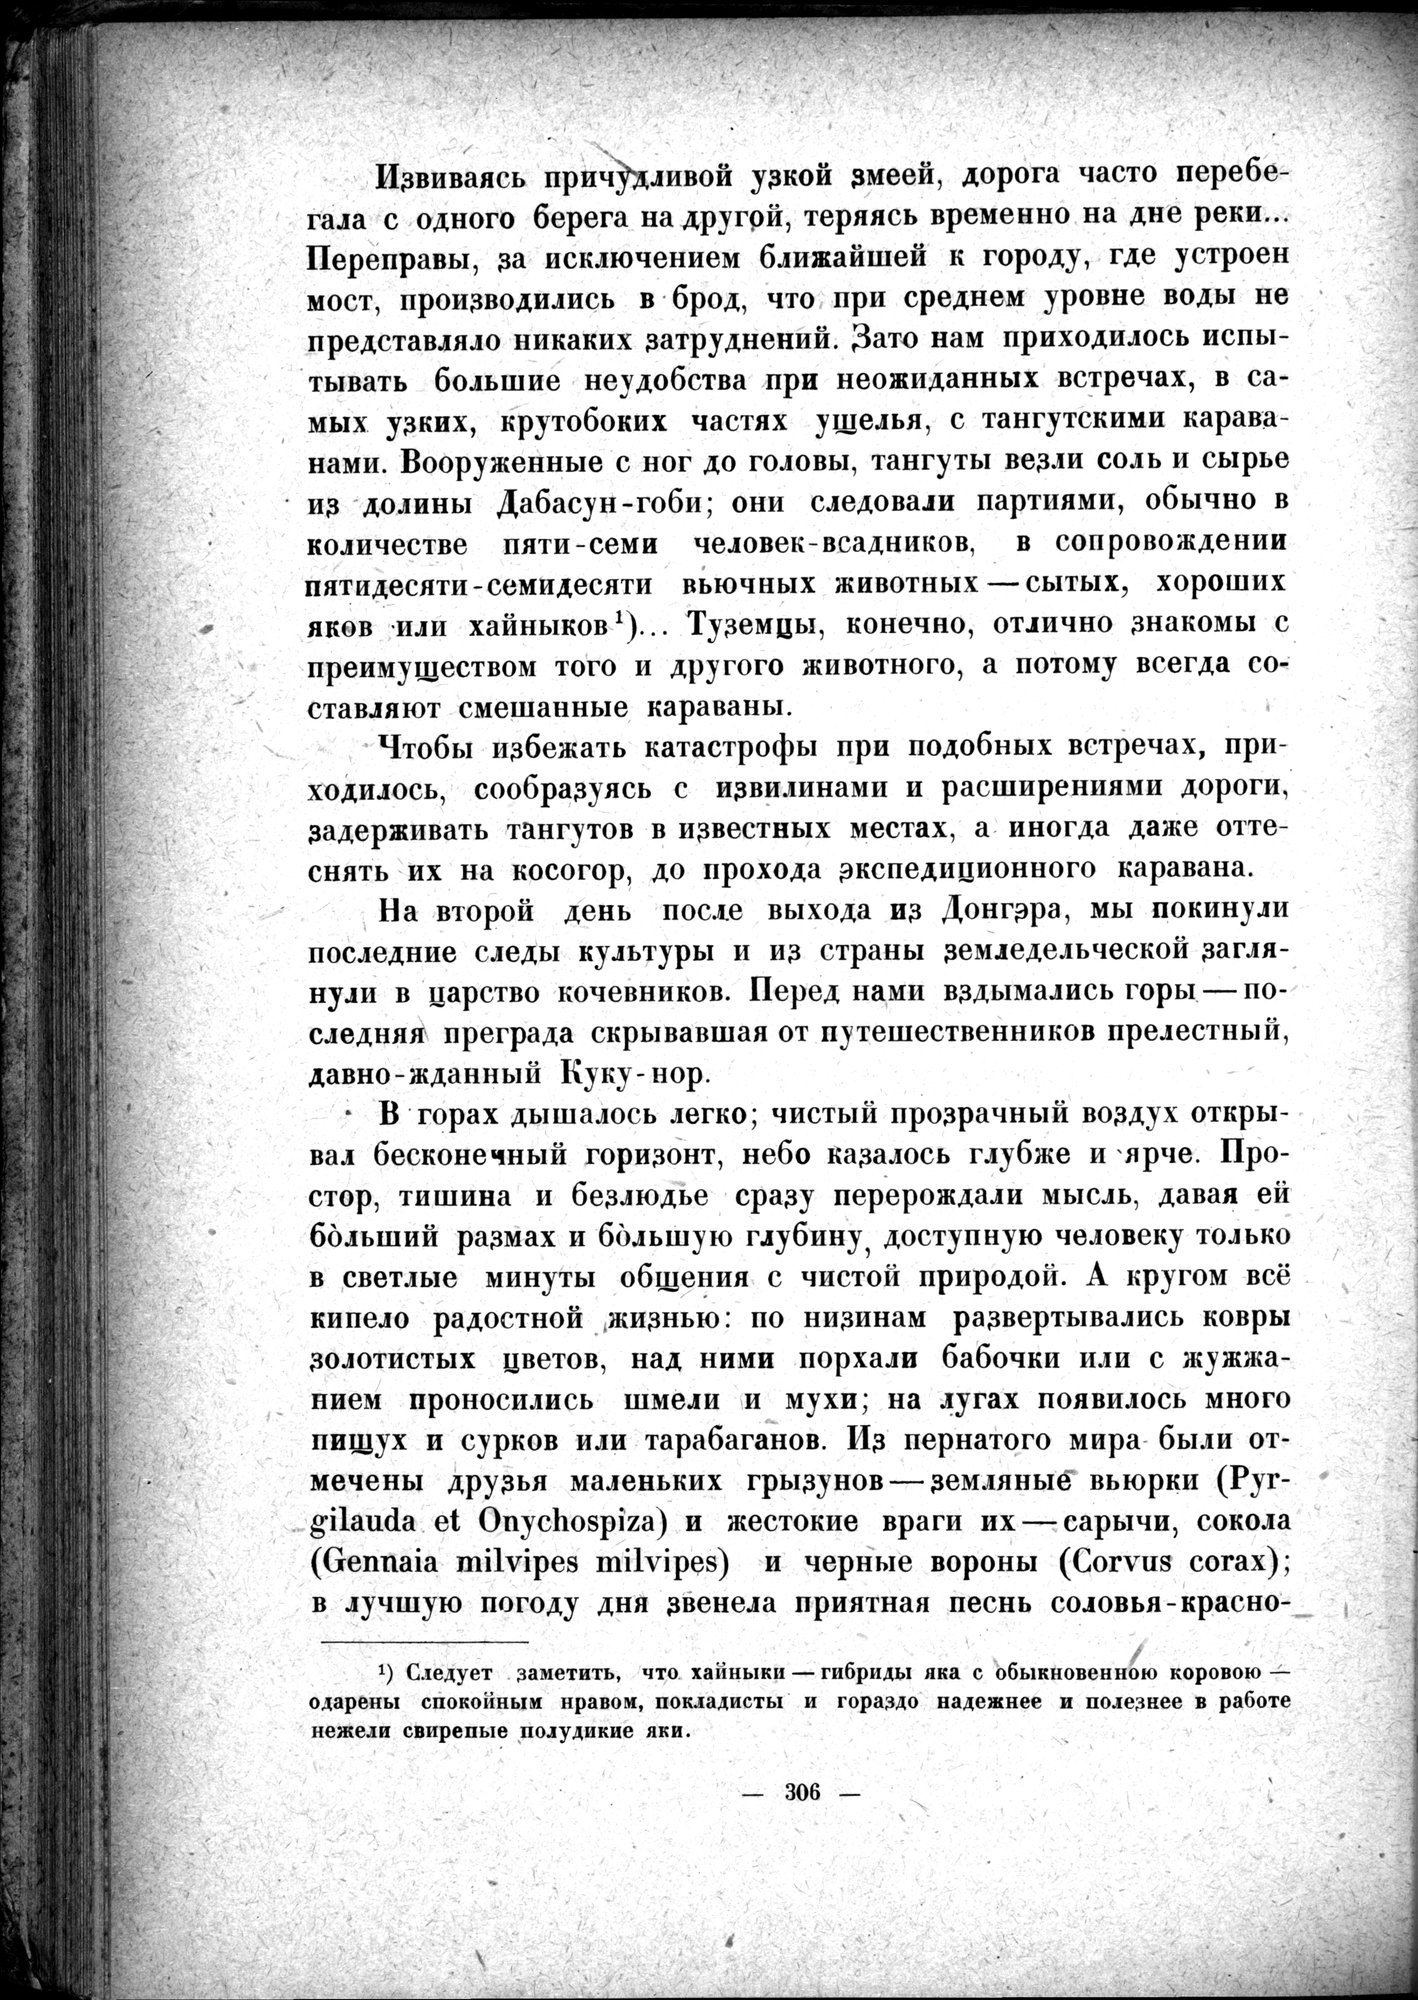 Mongoliya i Amdo i mertby gorod Khara-Khoto : vol.1 / Page 356 (Grayscale High Resolution Image)